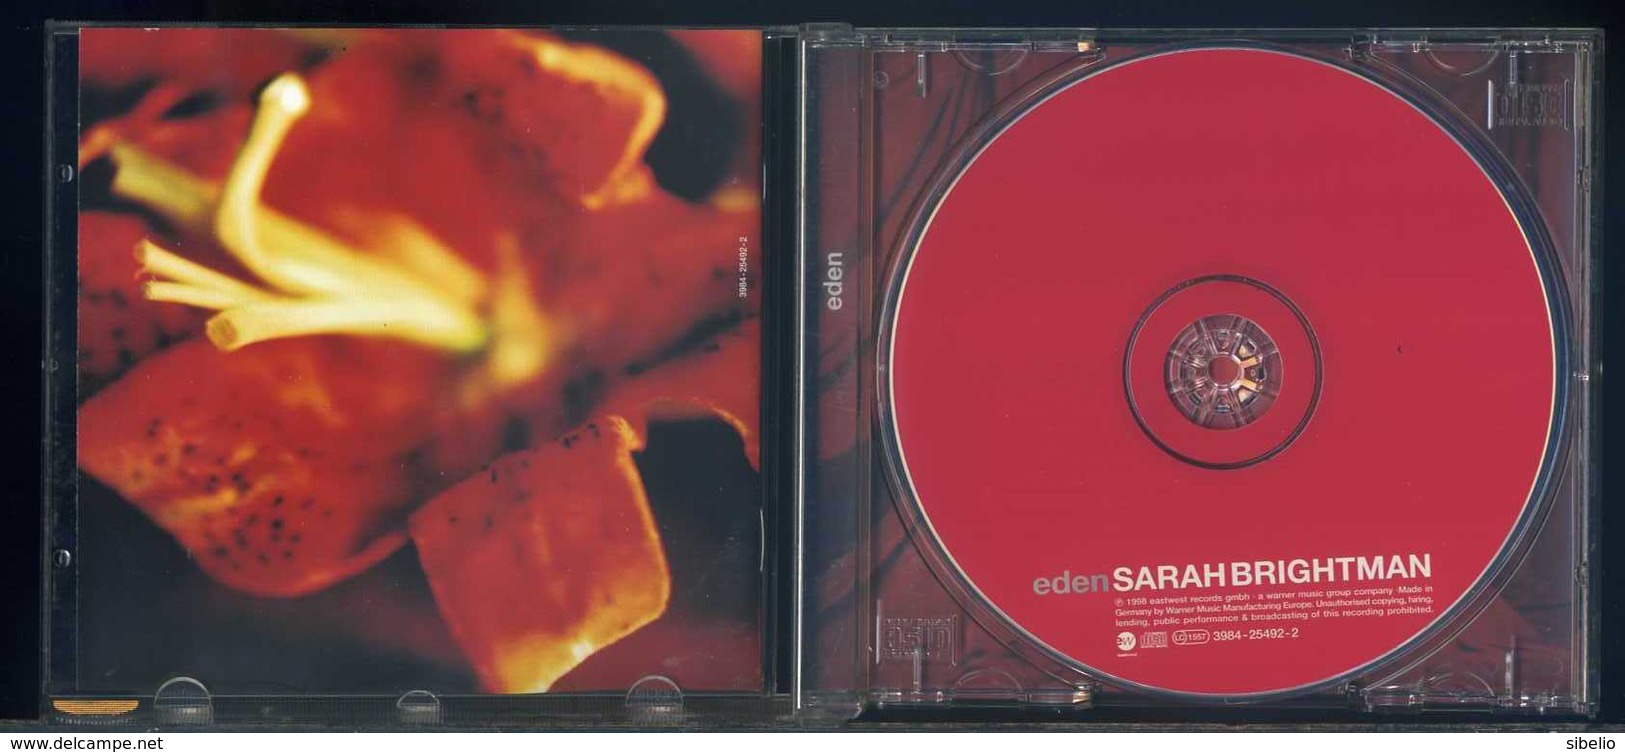 Sarah Brightman - Eden - 1CD - Disco, Pop